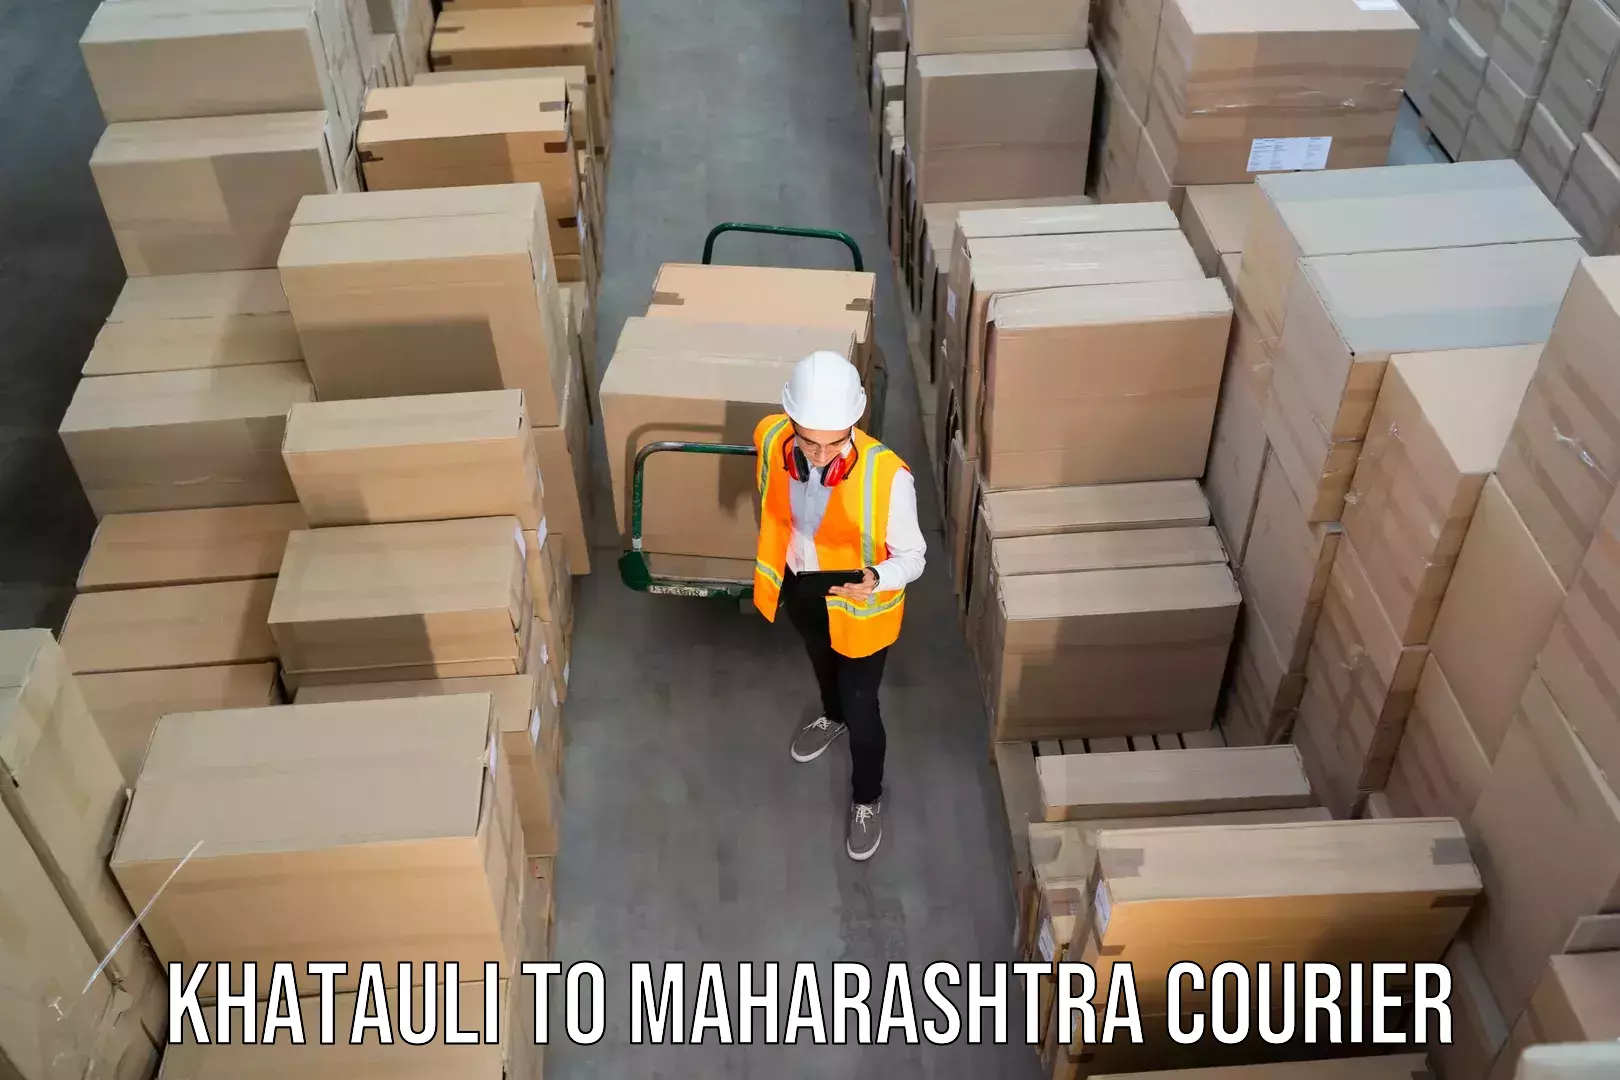 Subscription-based courier Khatauli to Maharashtra